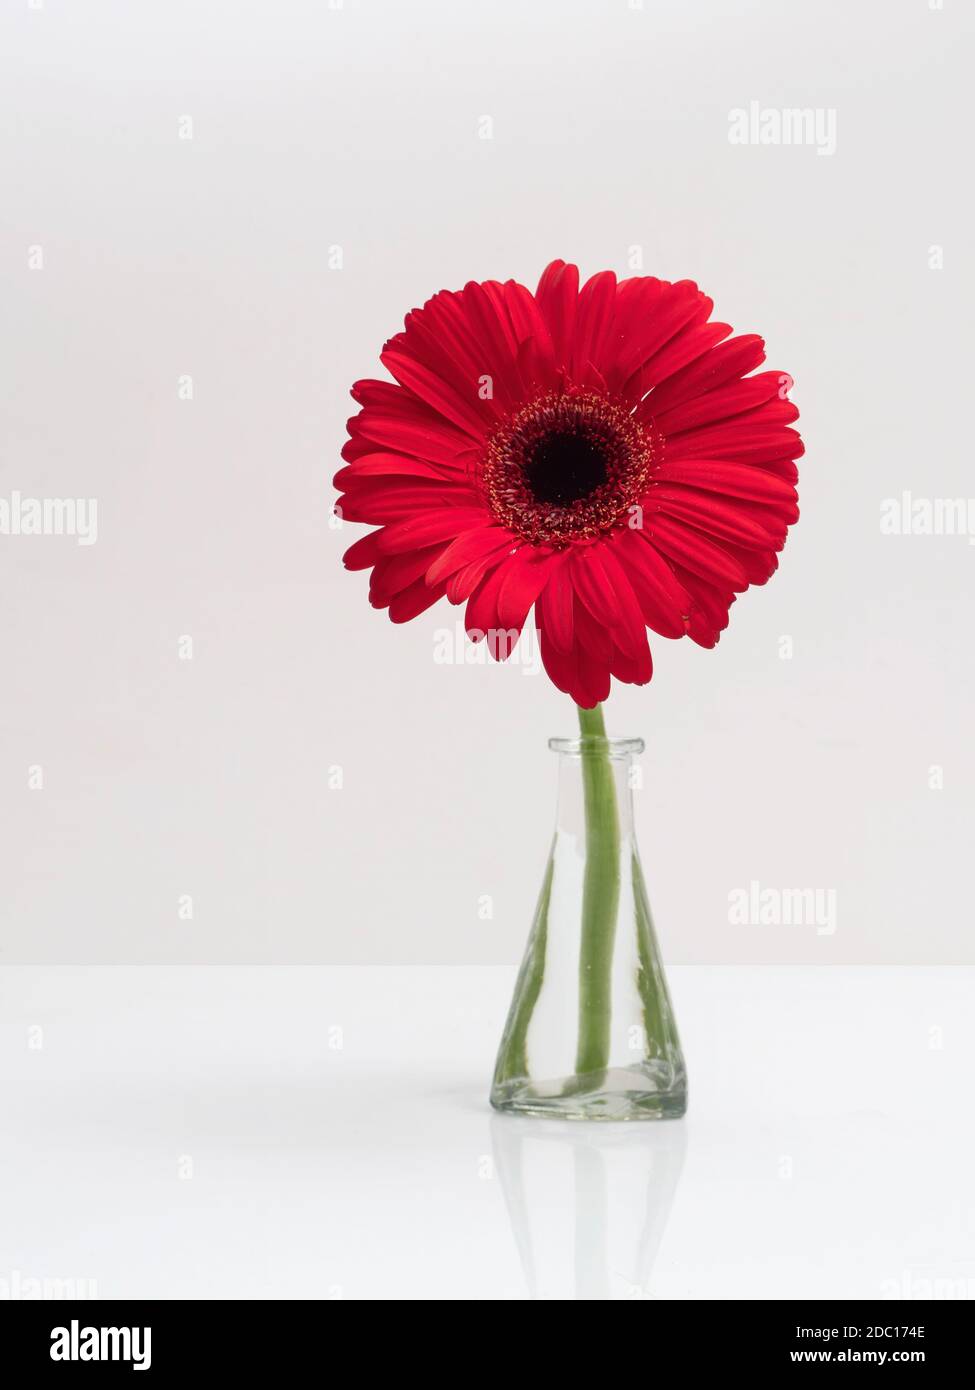 Red Gerbera, Gerber Daisy in glass vase on pale background. Gerbera jamesonii. Stock Photo